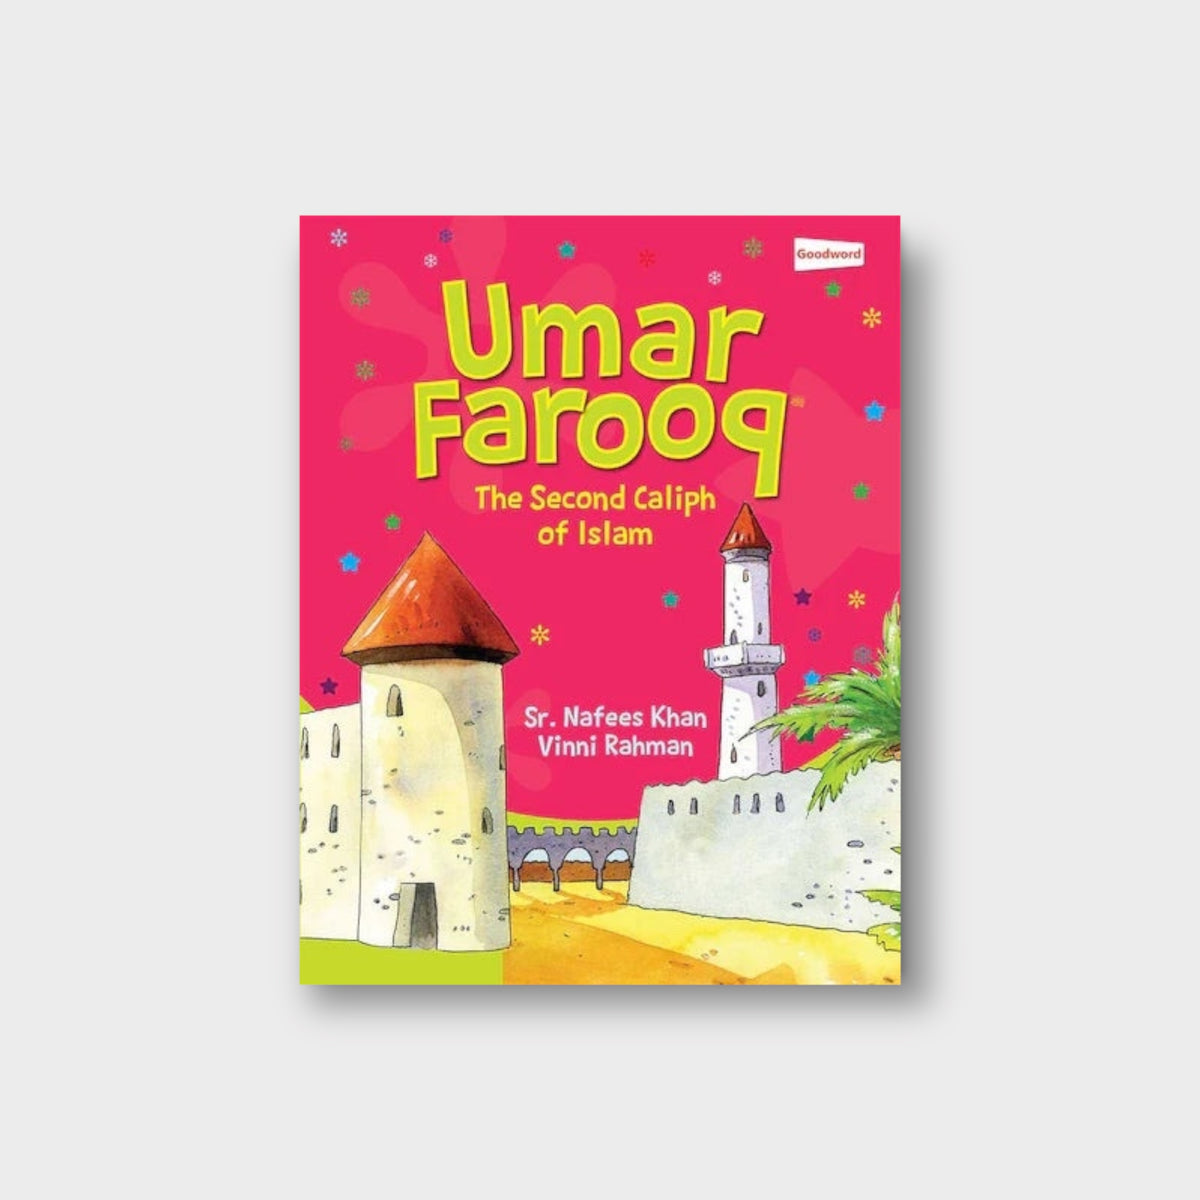 The Story Of Umar Farooq